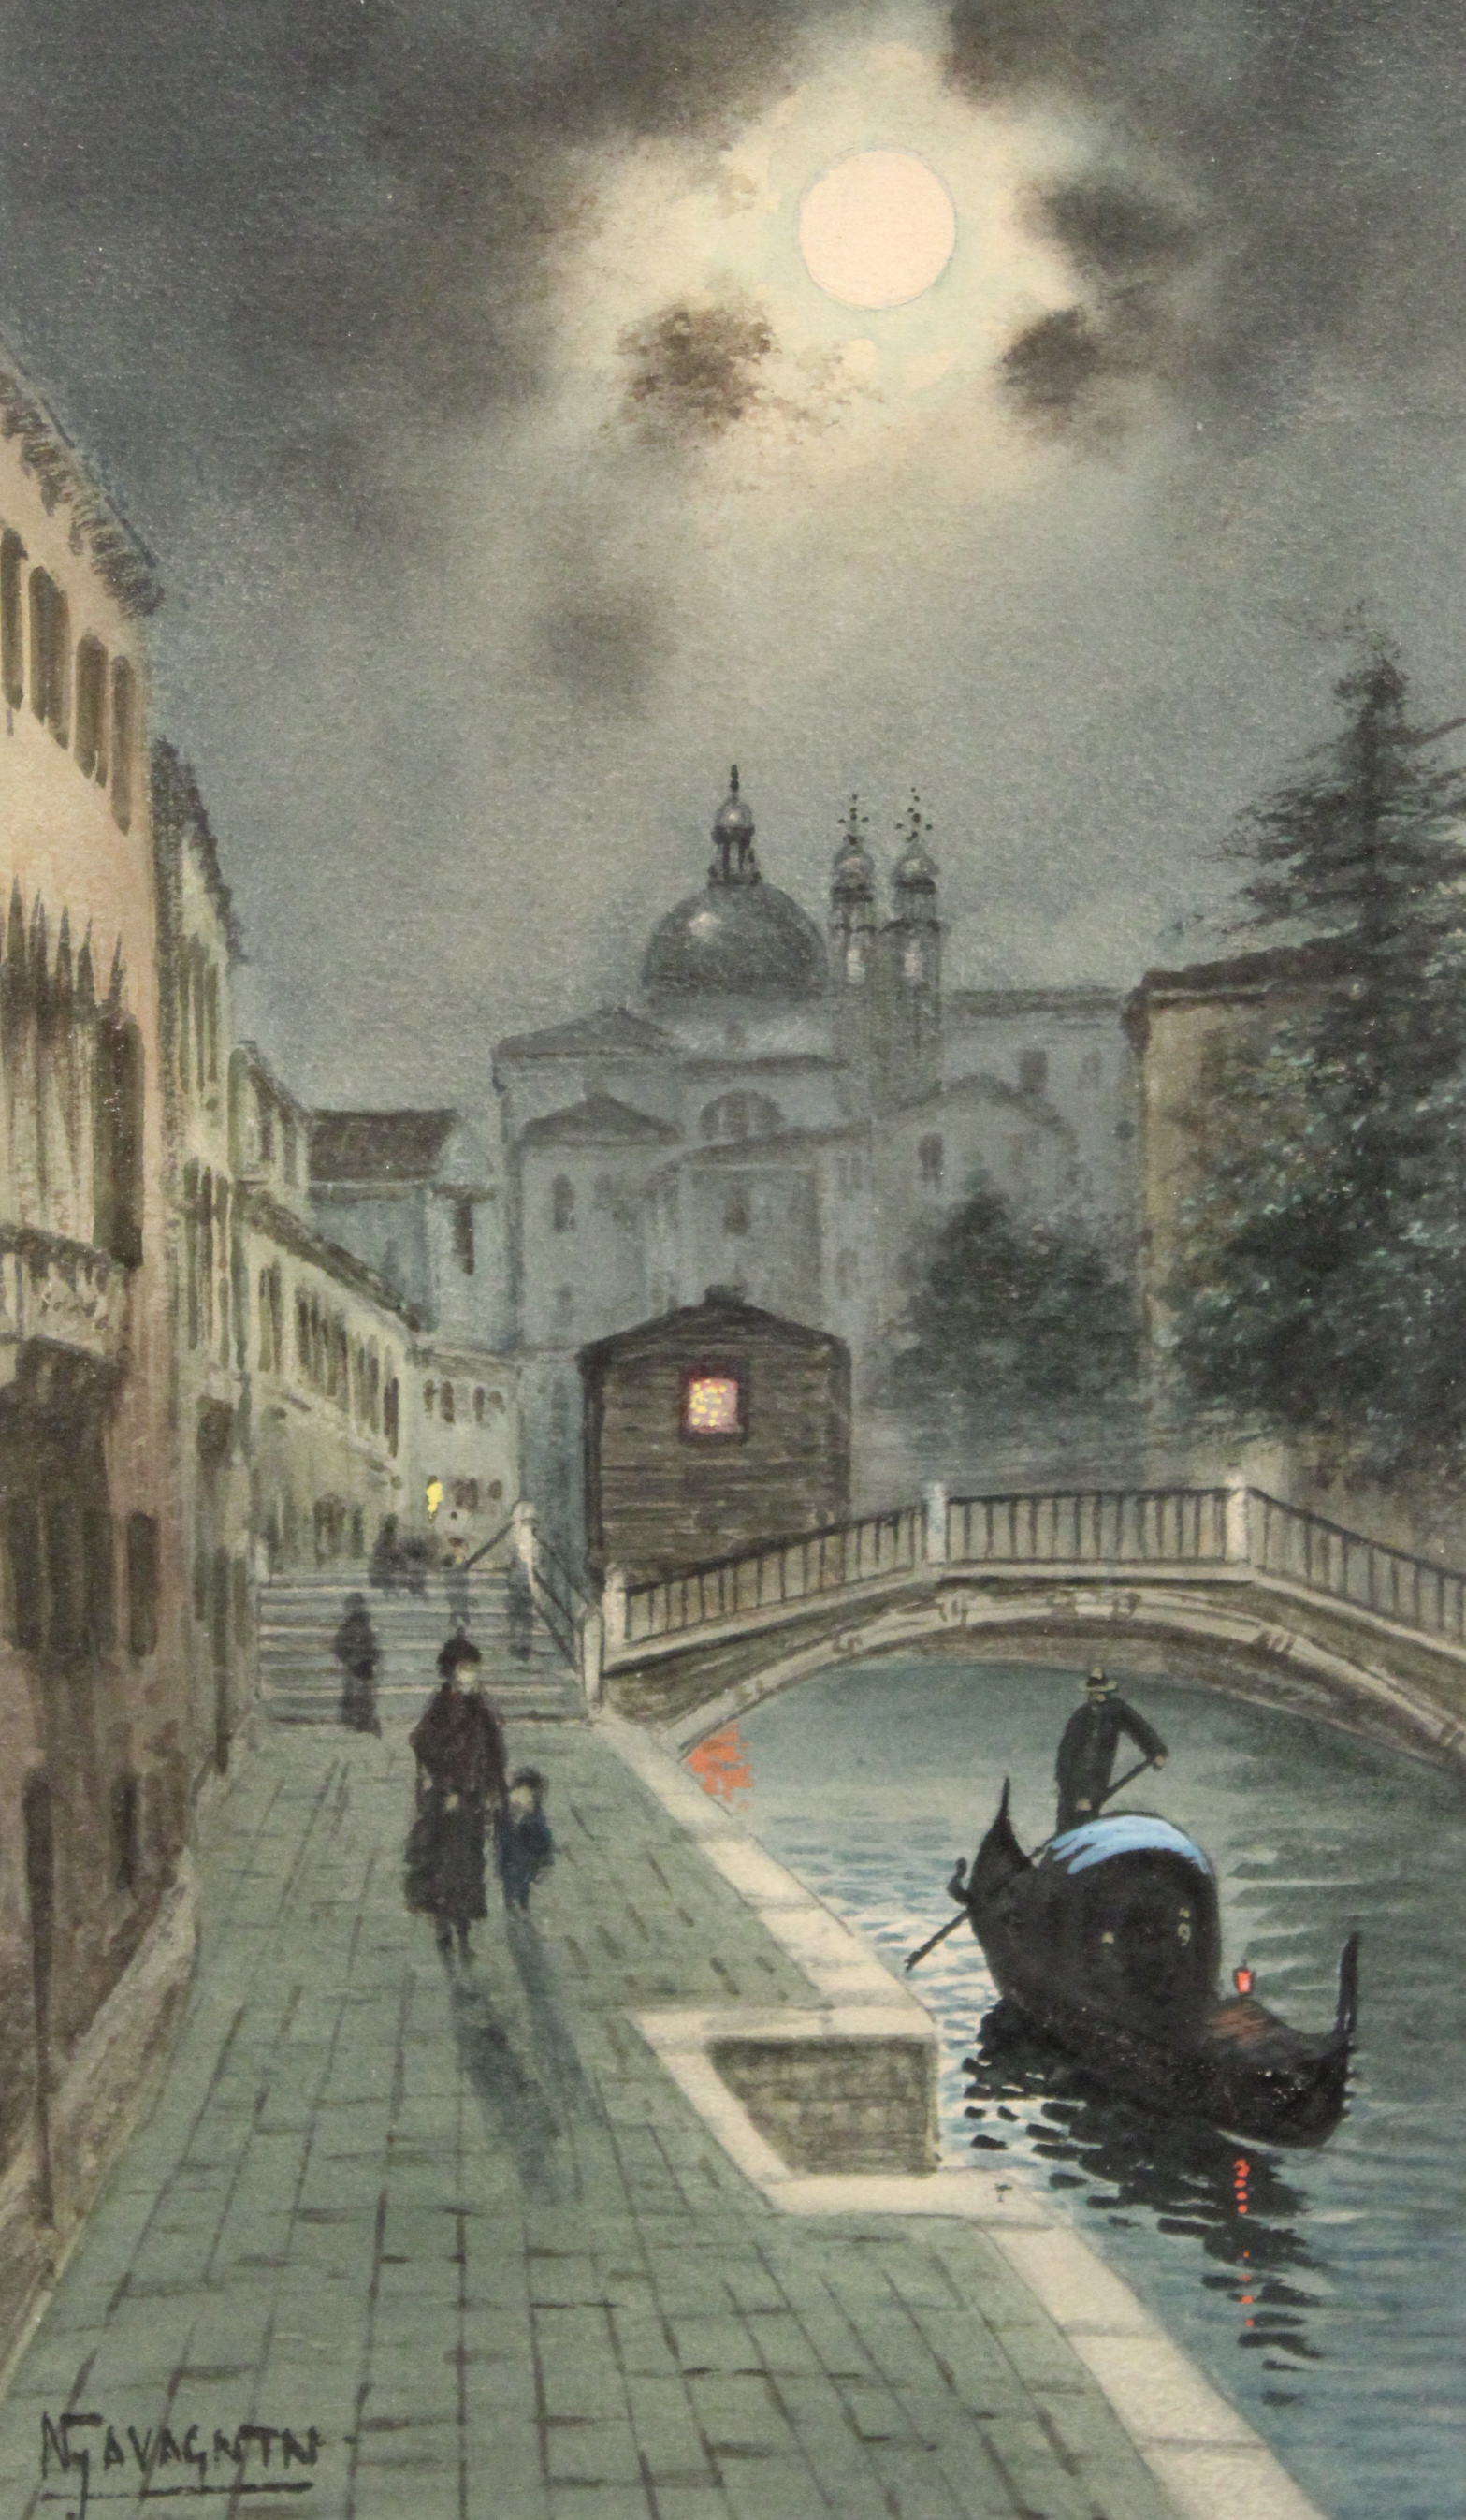 NATALE GAVAGNIN (ITALY, 1851-1923)